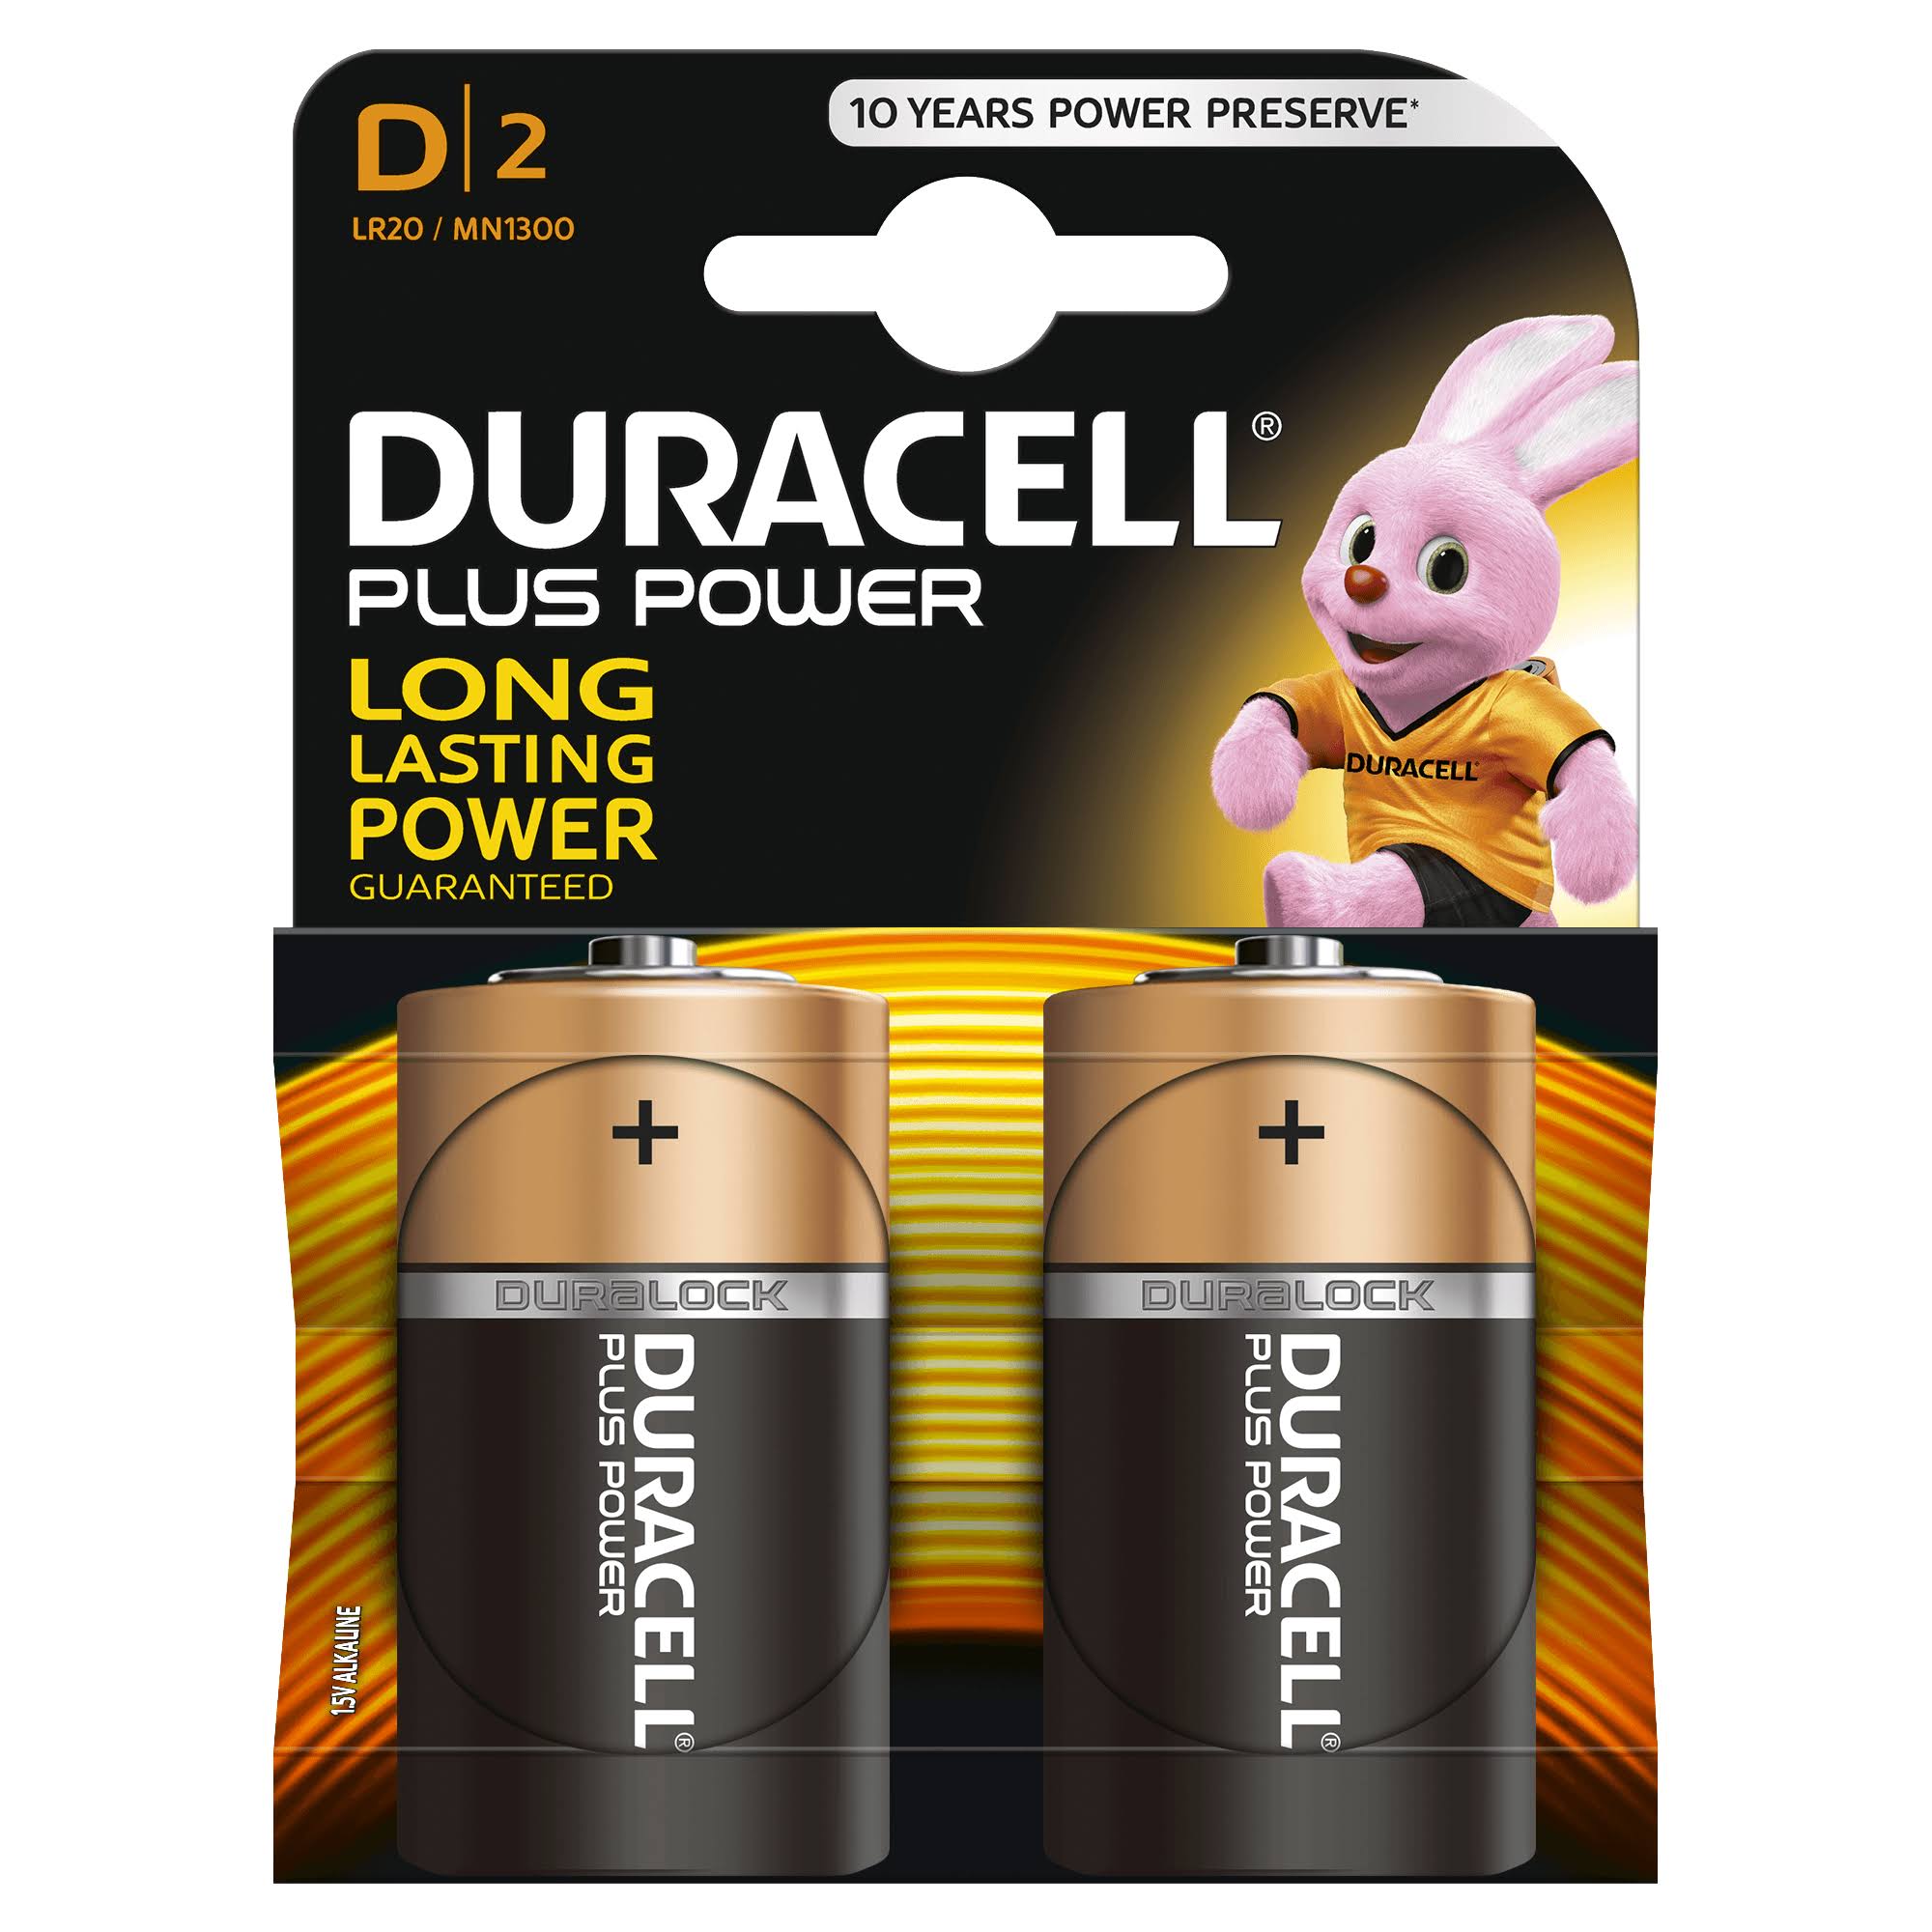 Duracell Plus Power Alkaline Batteries - Size D, 2 Pack